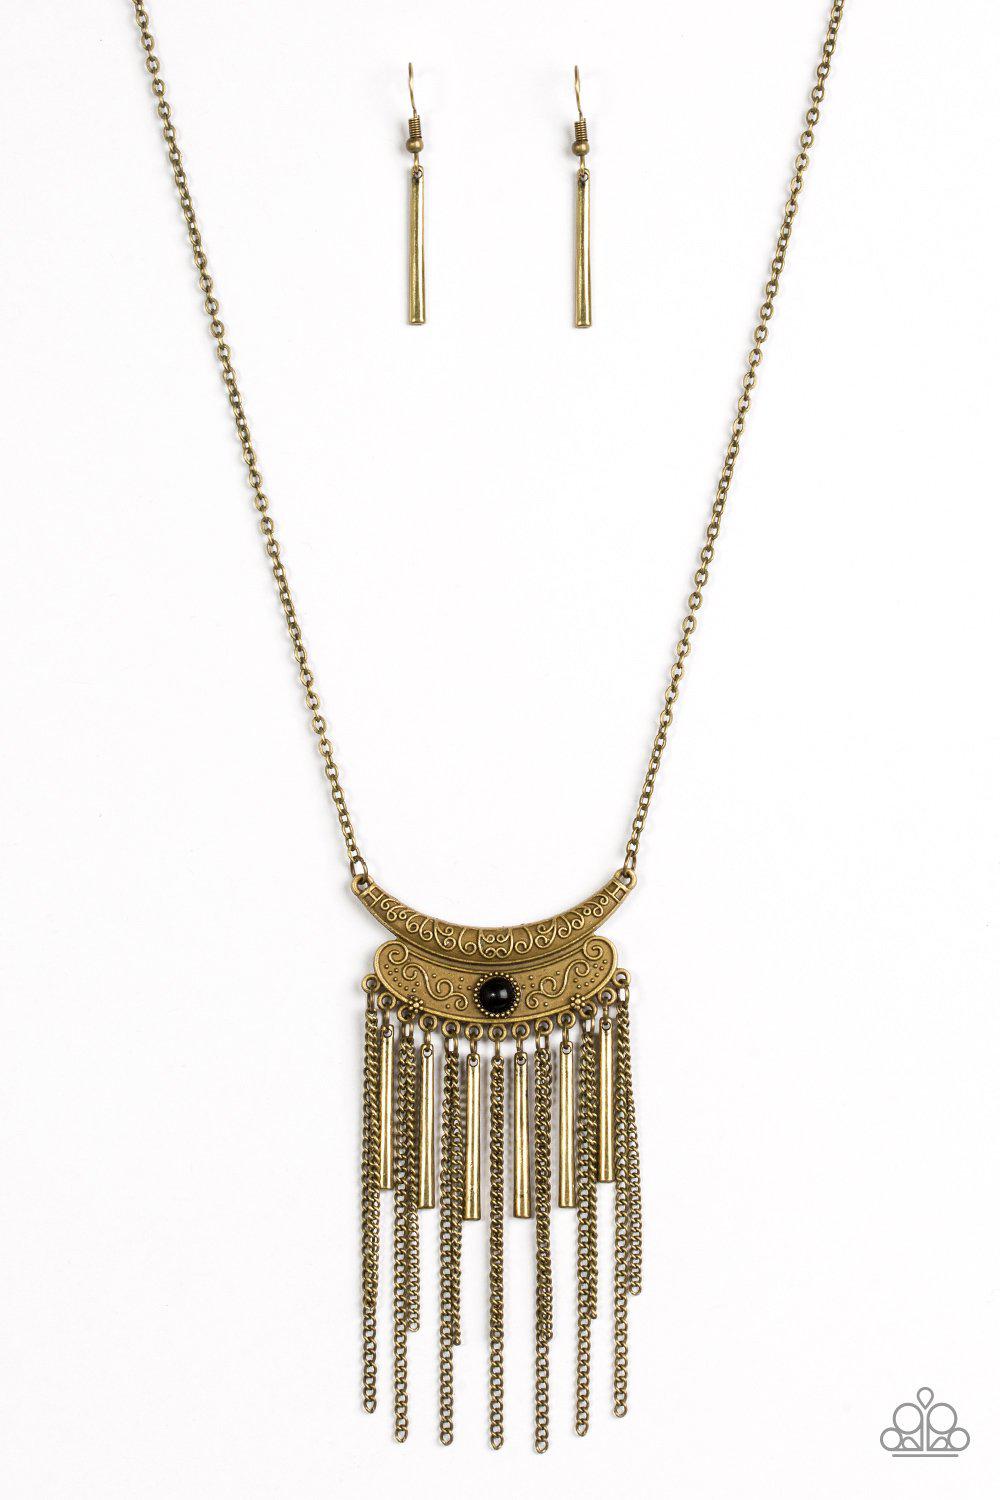 Take Zen Brass Necklace - Paparazzi Accessories-CarasShop.com - $5 Jewelry by Cara Jewels